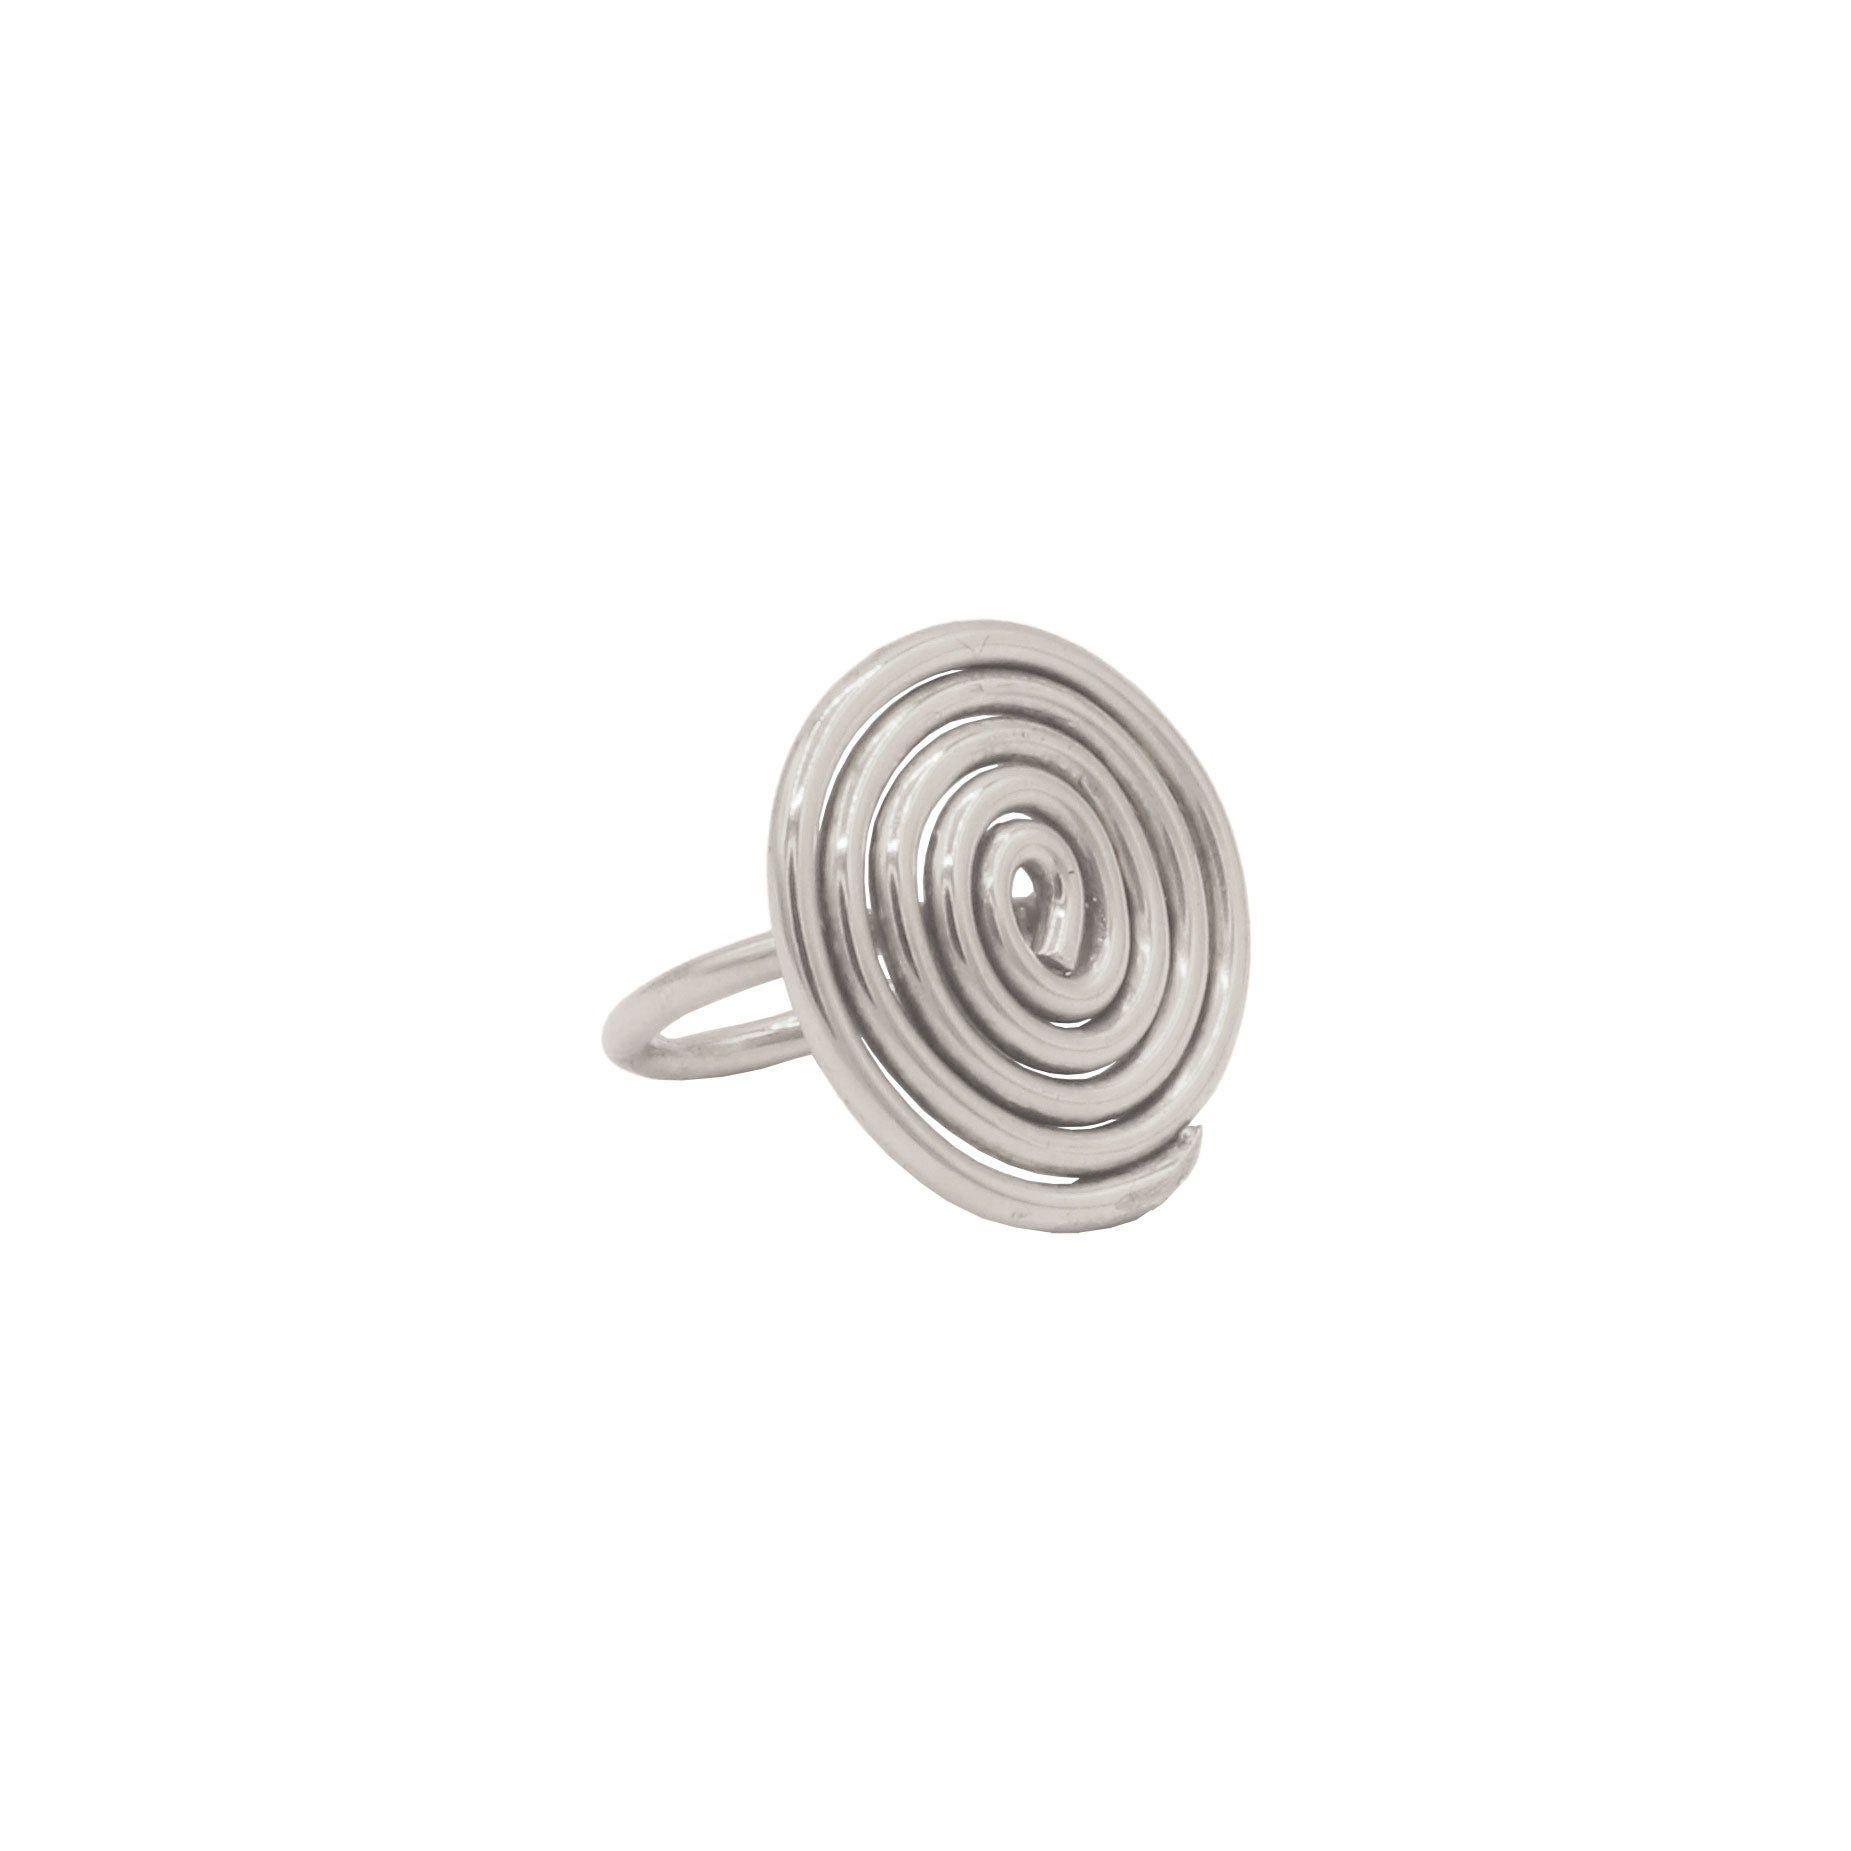 Sterling silver spiral statement ring